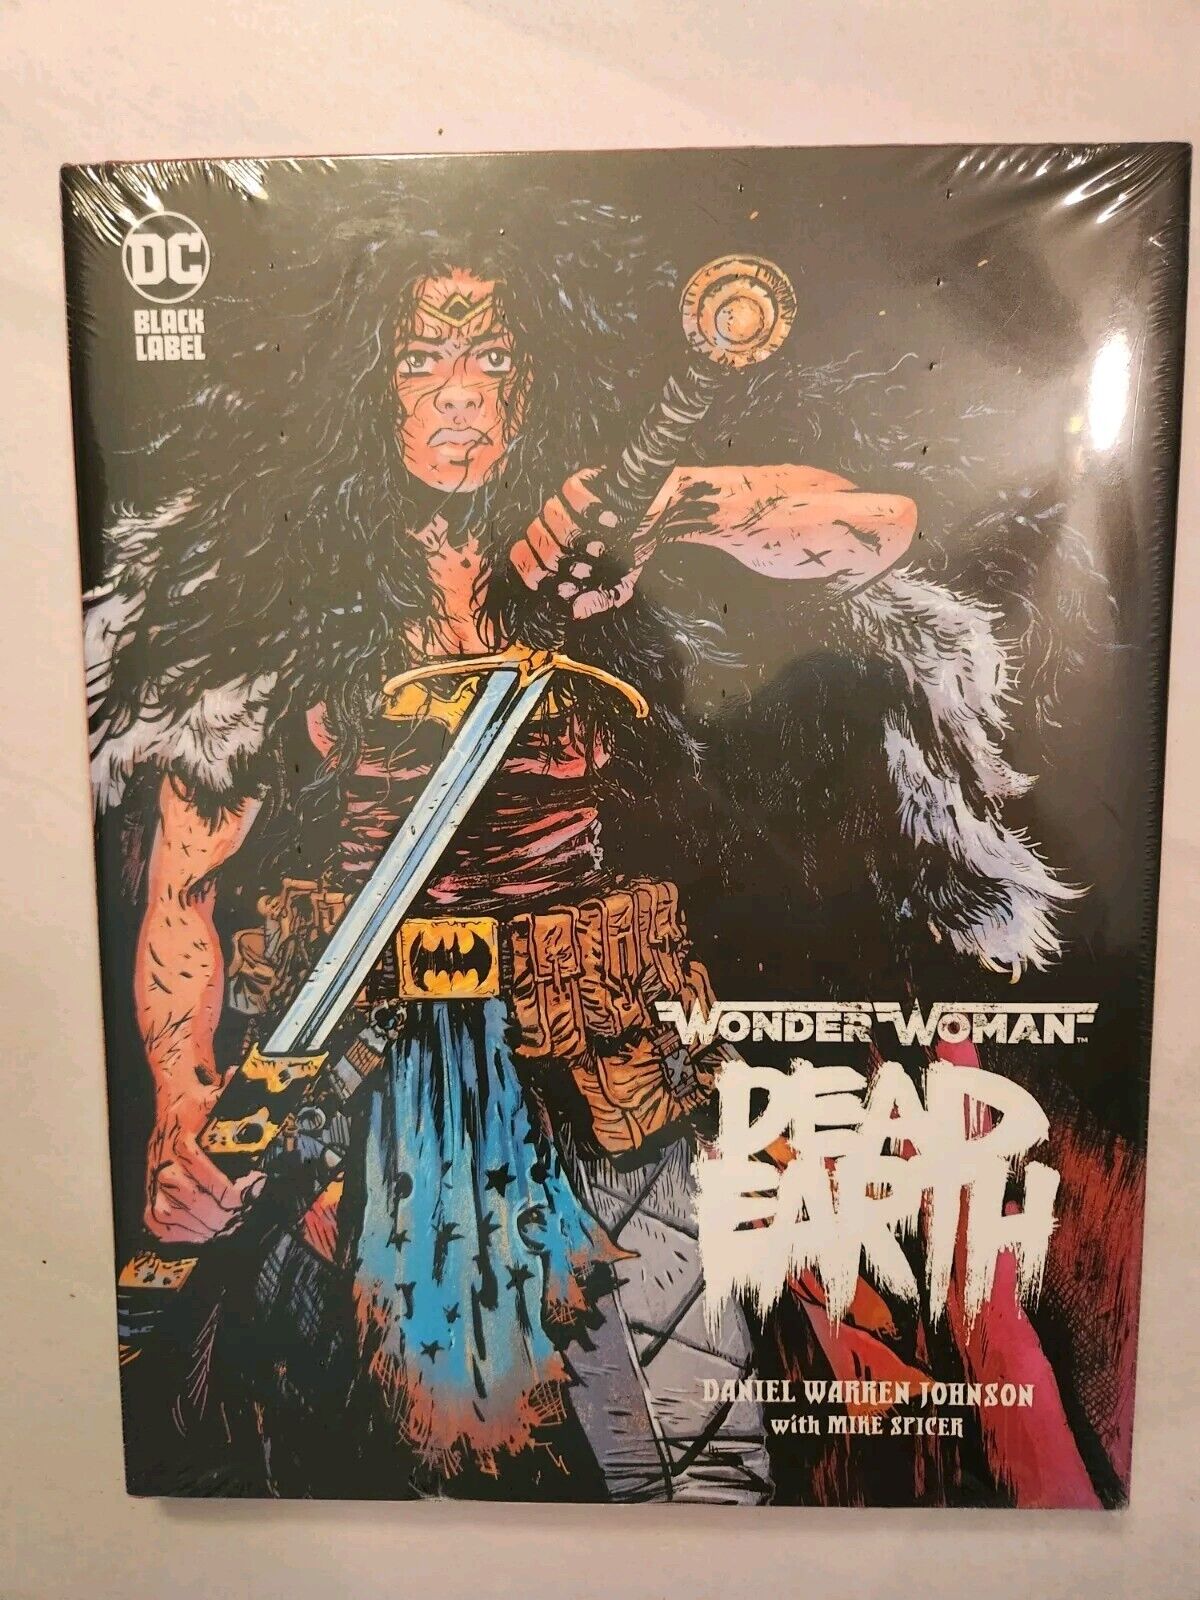 Wonder Woman: Dead Earth [Hardcover] Johnson, Daniel